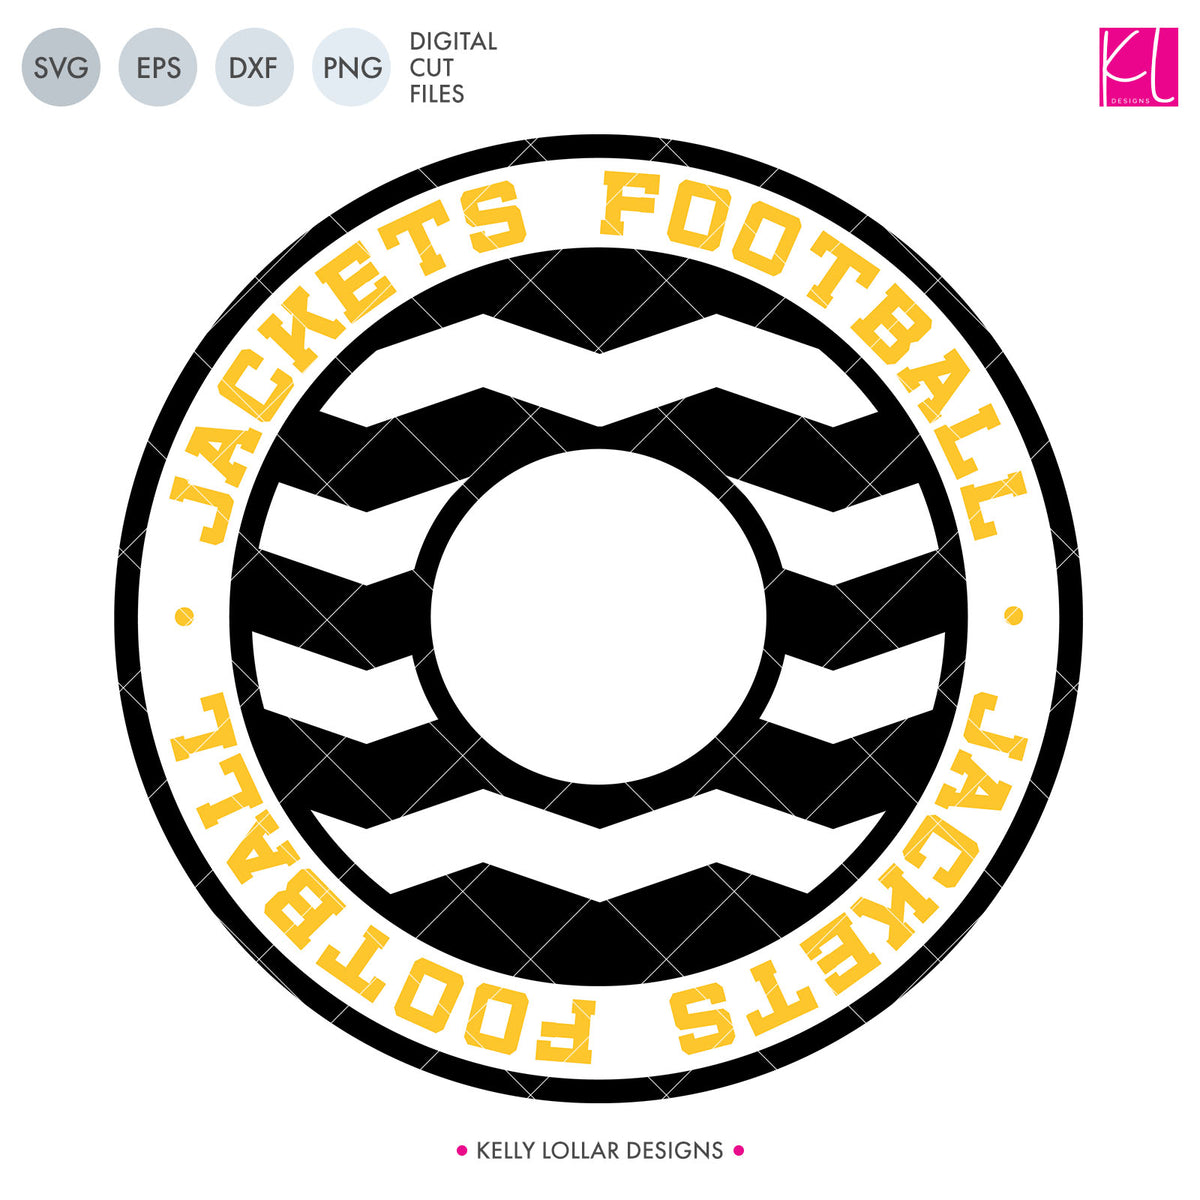 Jackets Football Bundle | SVG DXF EPS PNG Cut Files